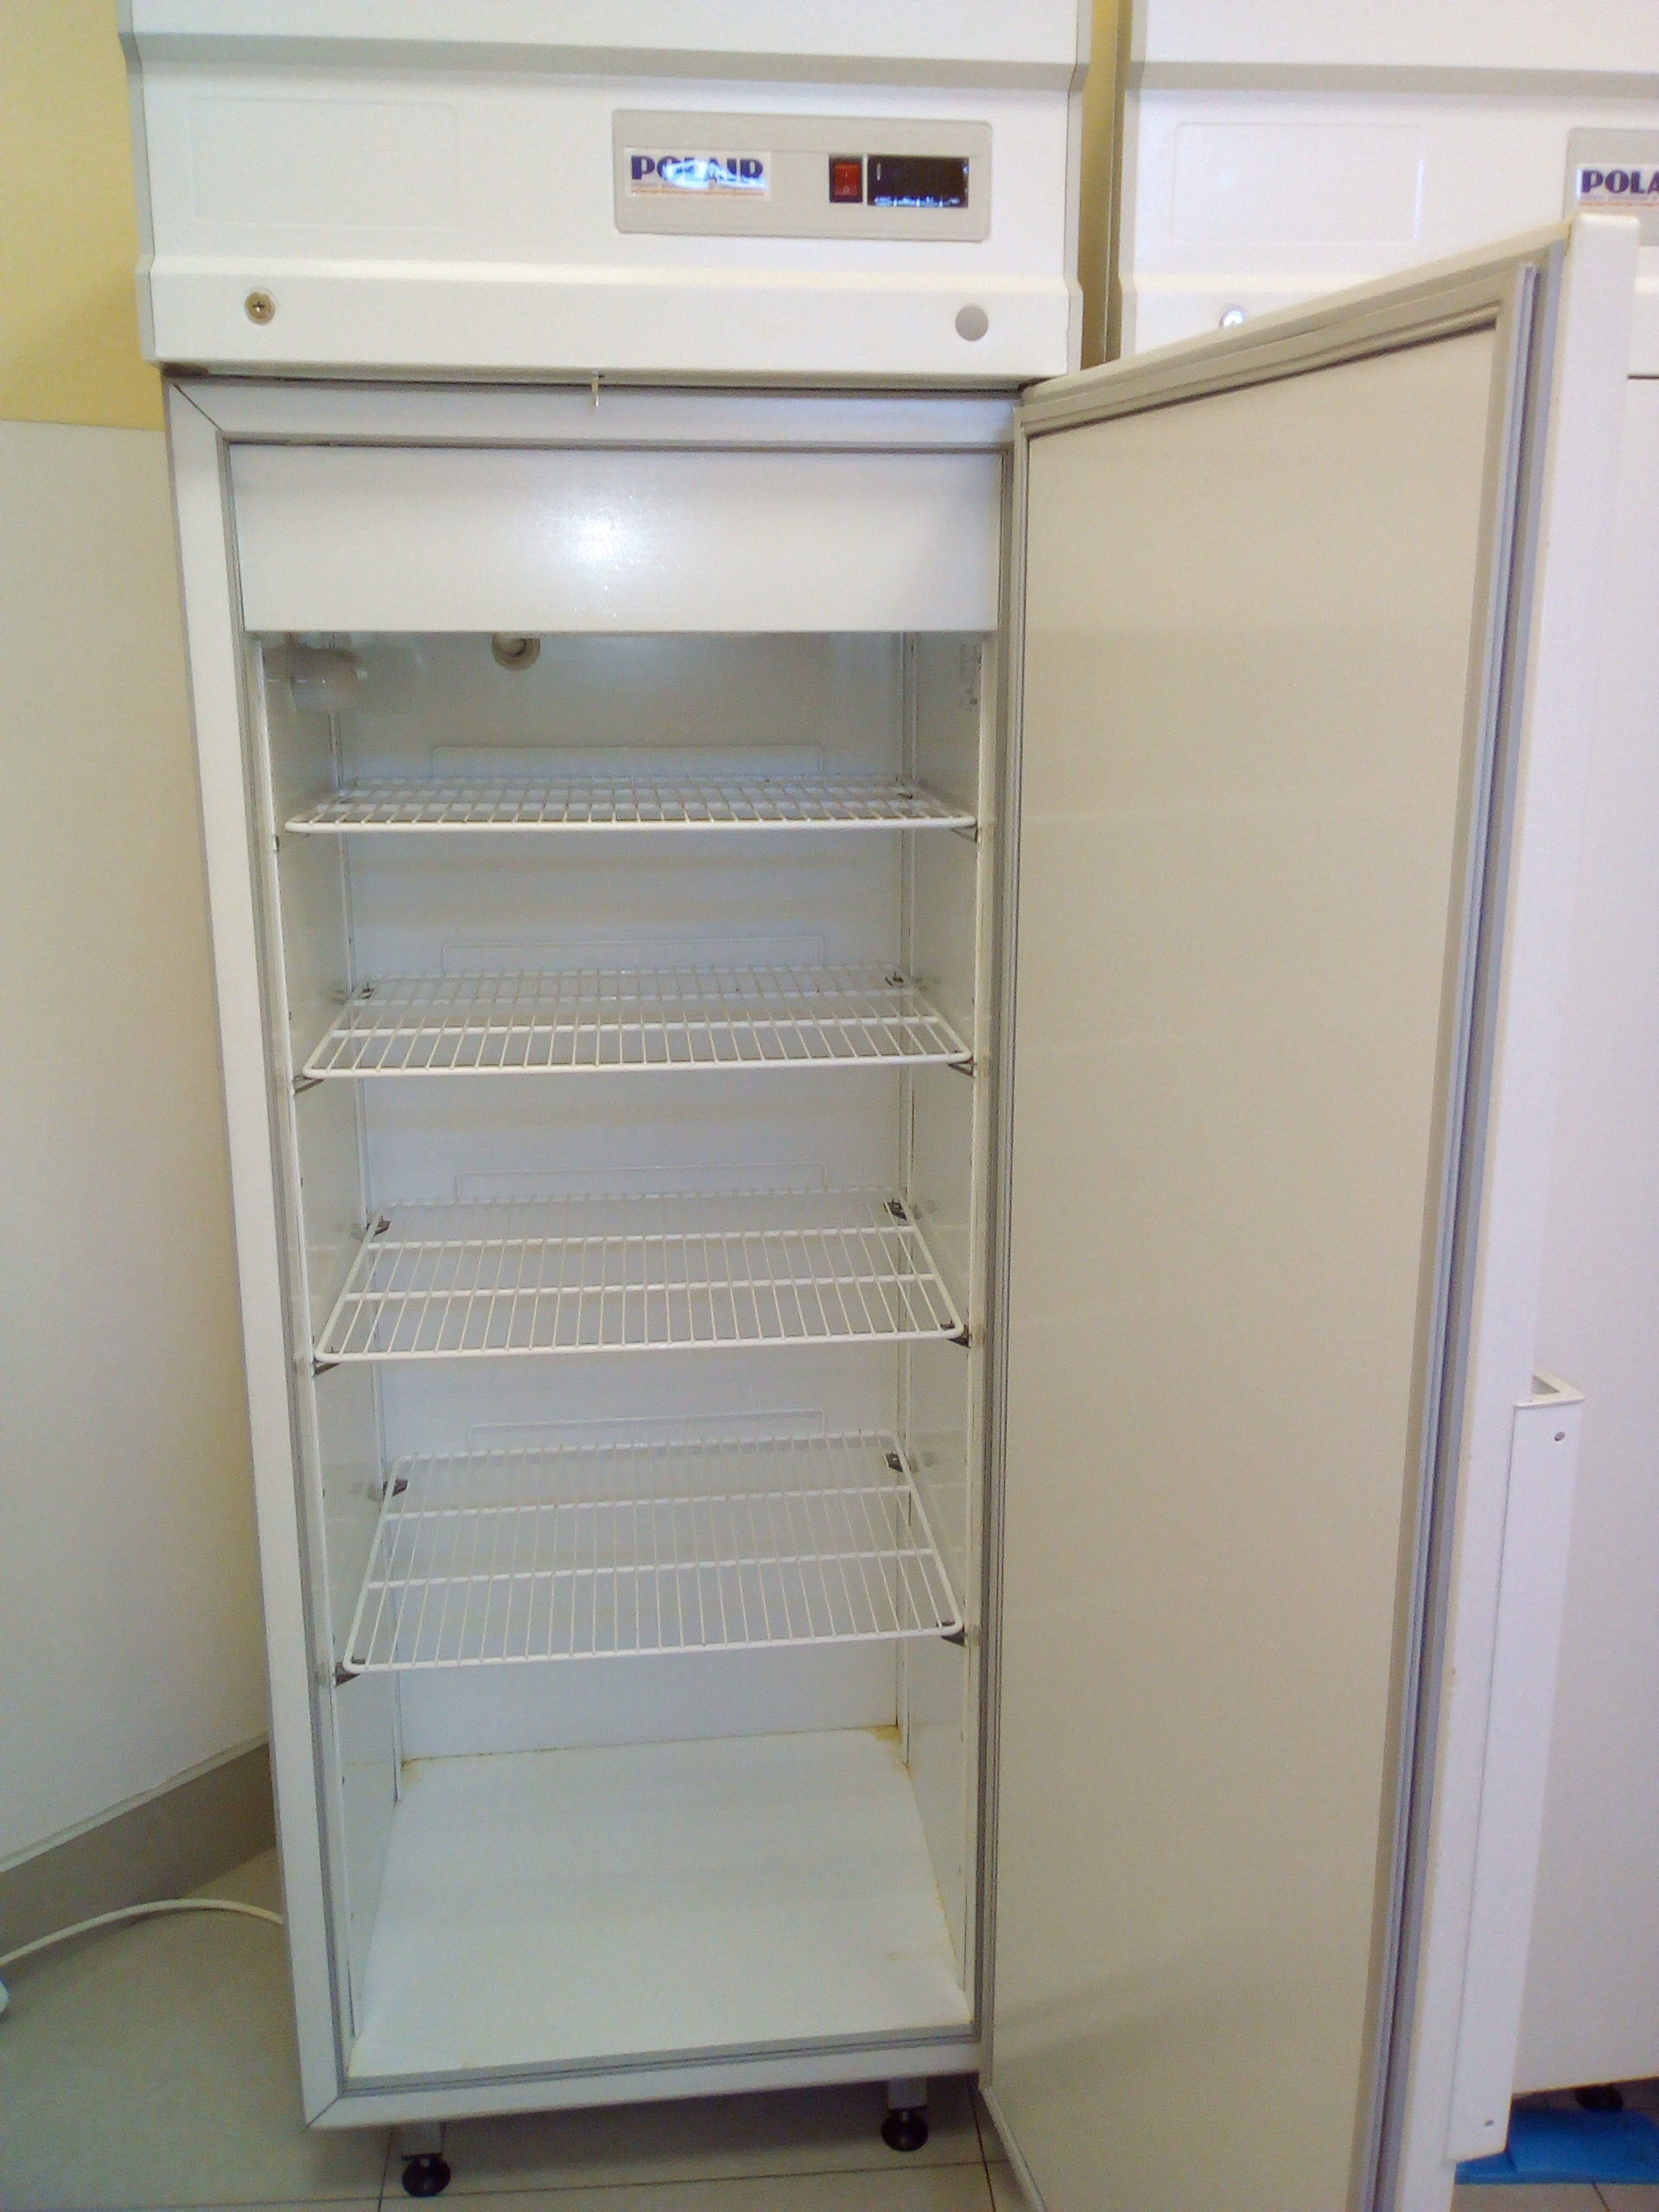 Морозильный шкаф polair cb107 g шн 0 7 нерж